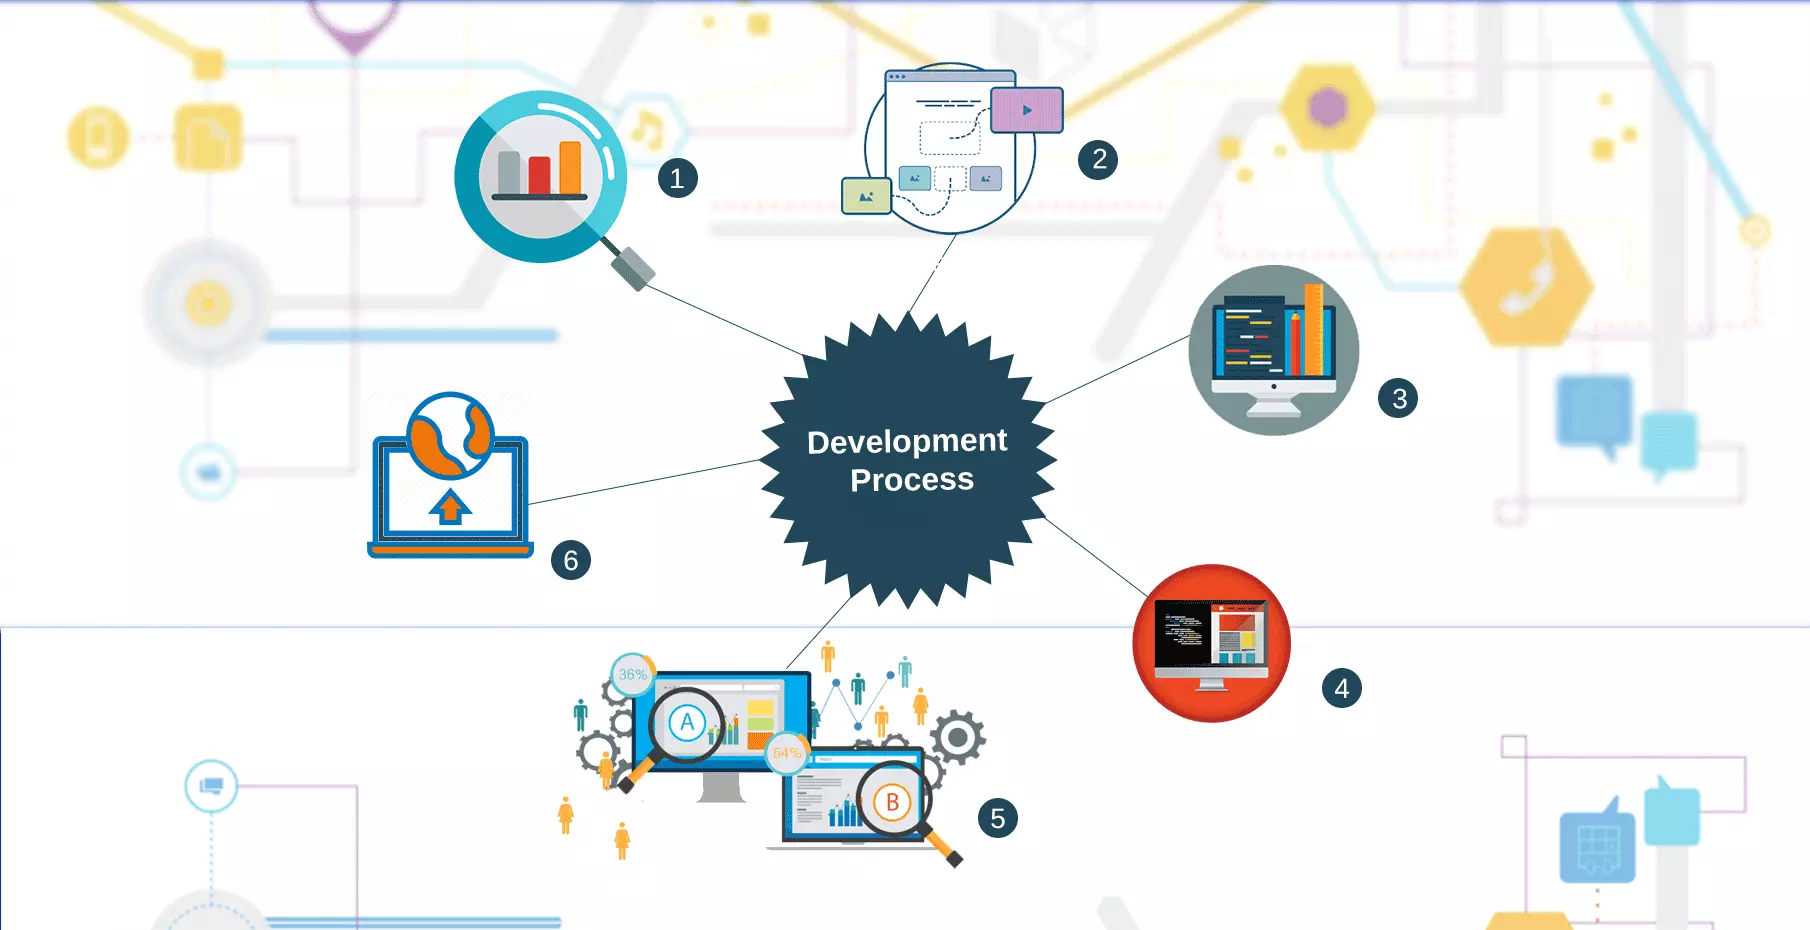 6 Key Benefits Of Web App Development For Business